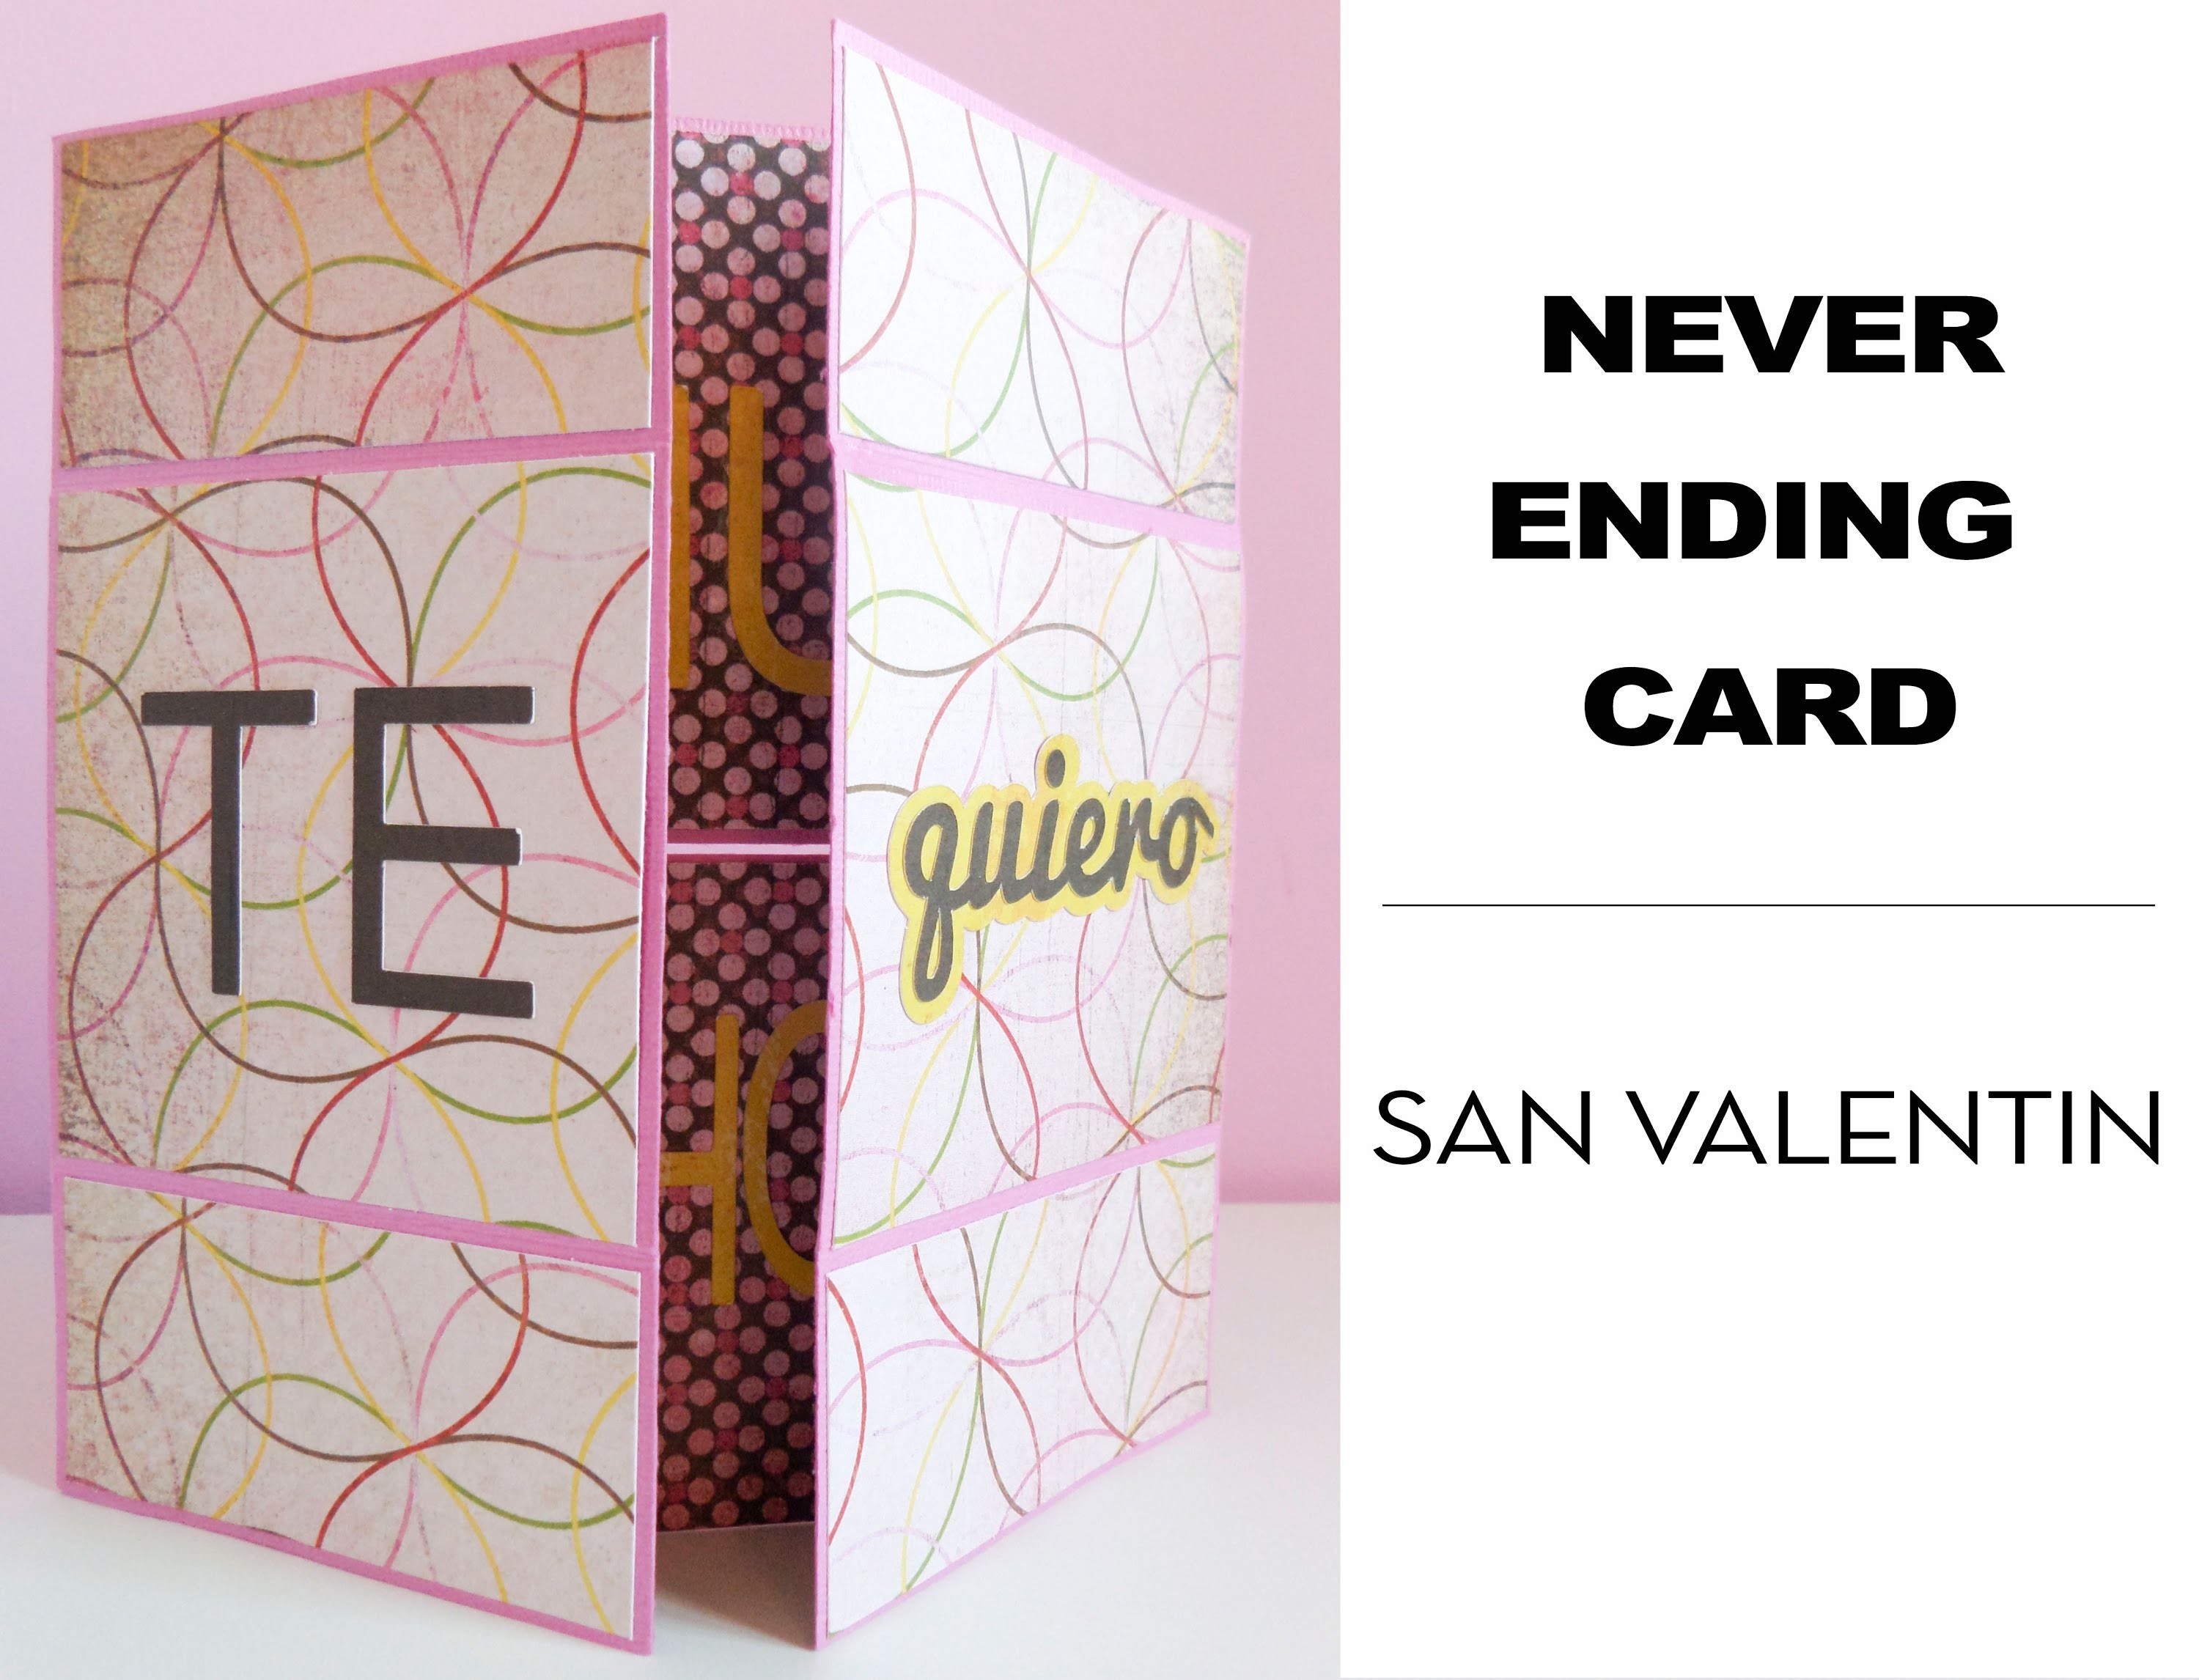 Never ending card San Valentín